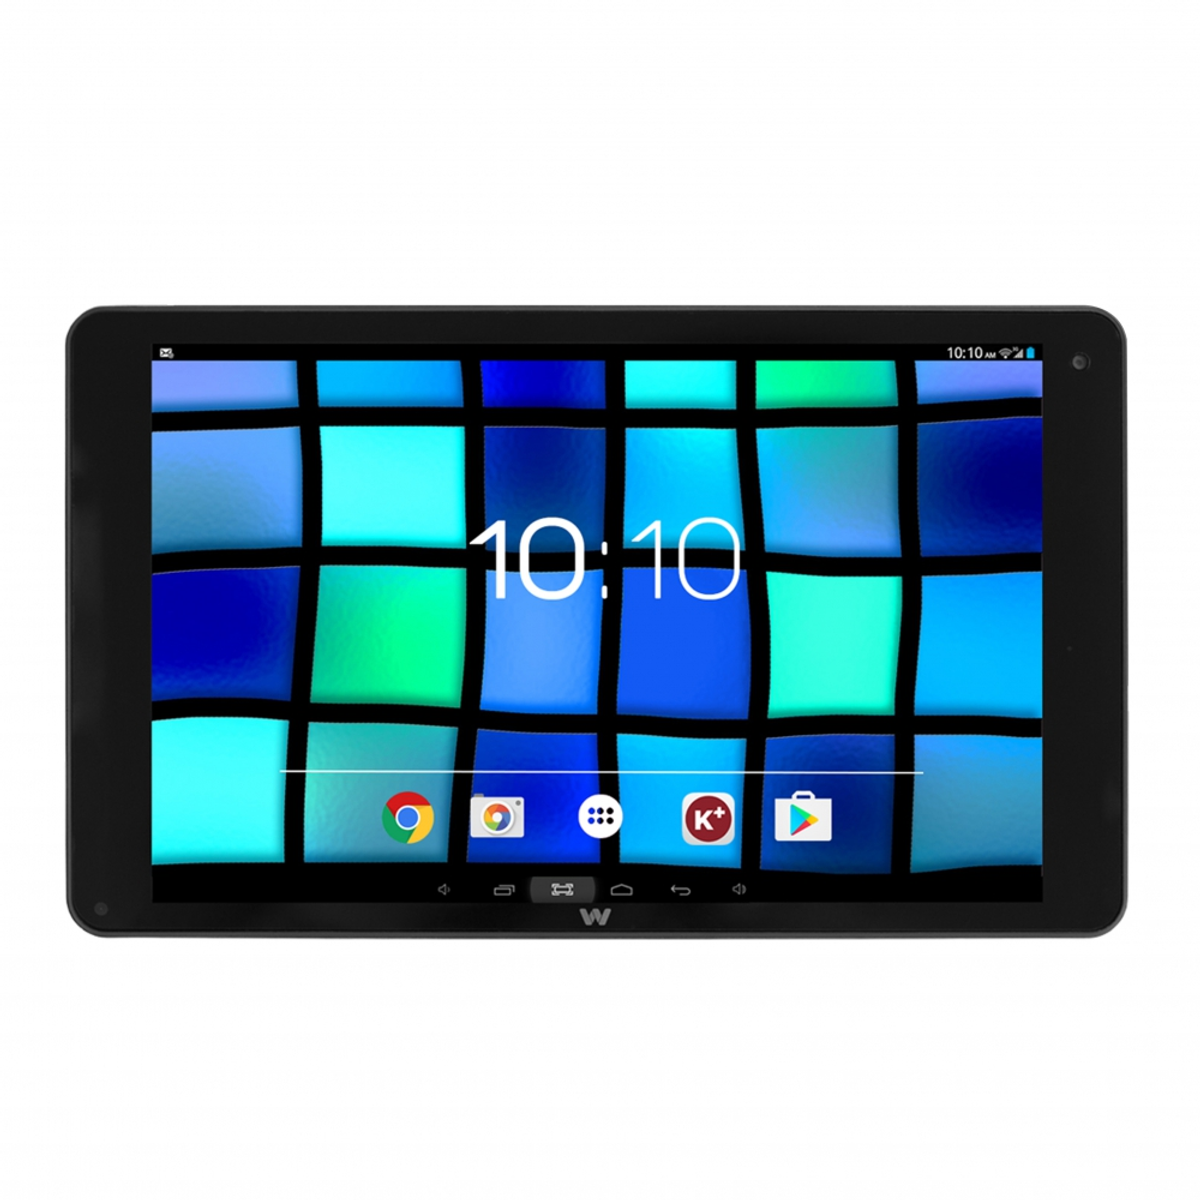 WOXTER X-200 PRO, 64 GB, Zoll, Tablet, Schwarz 10,1